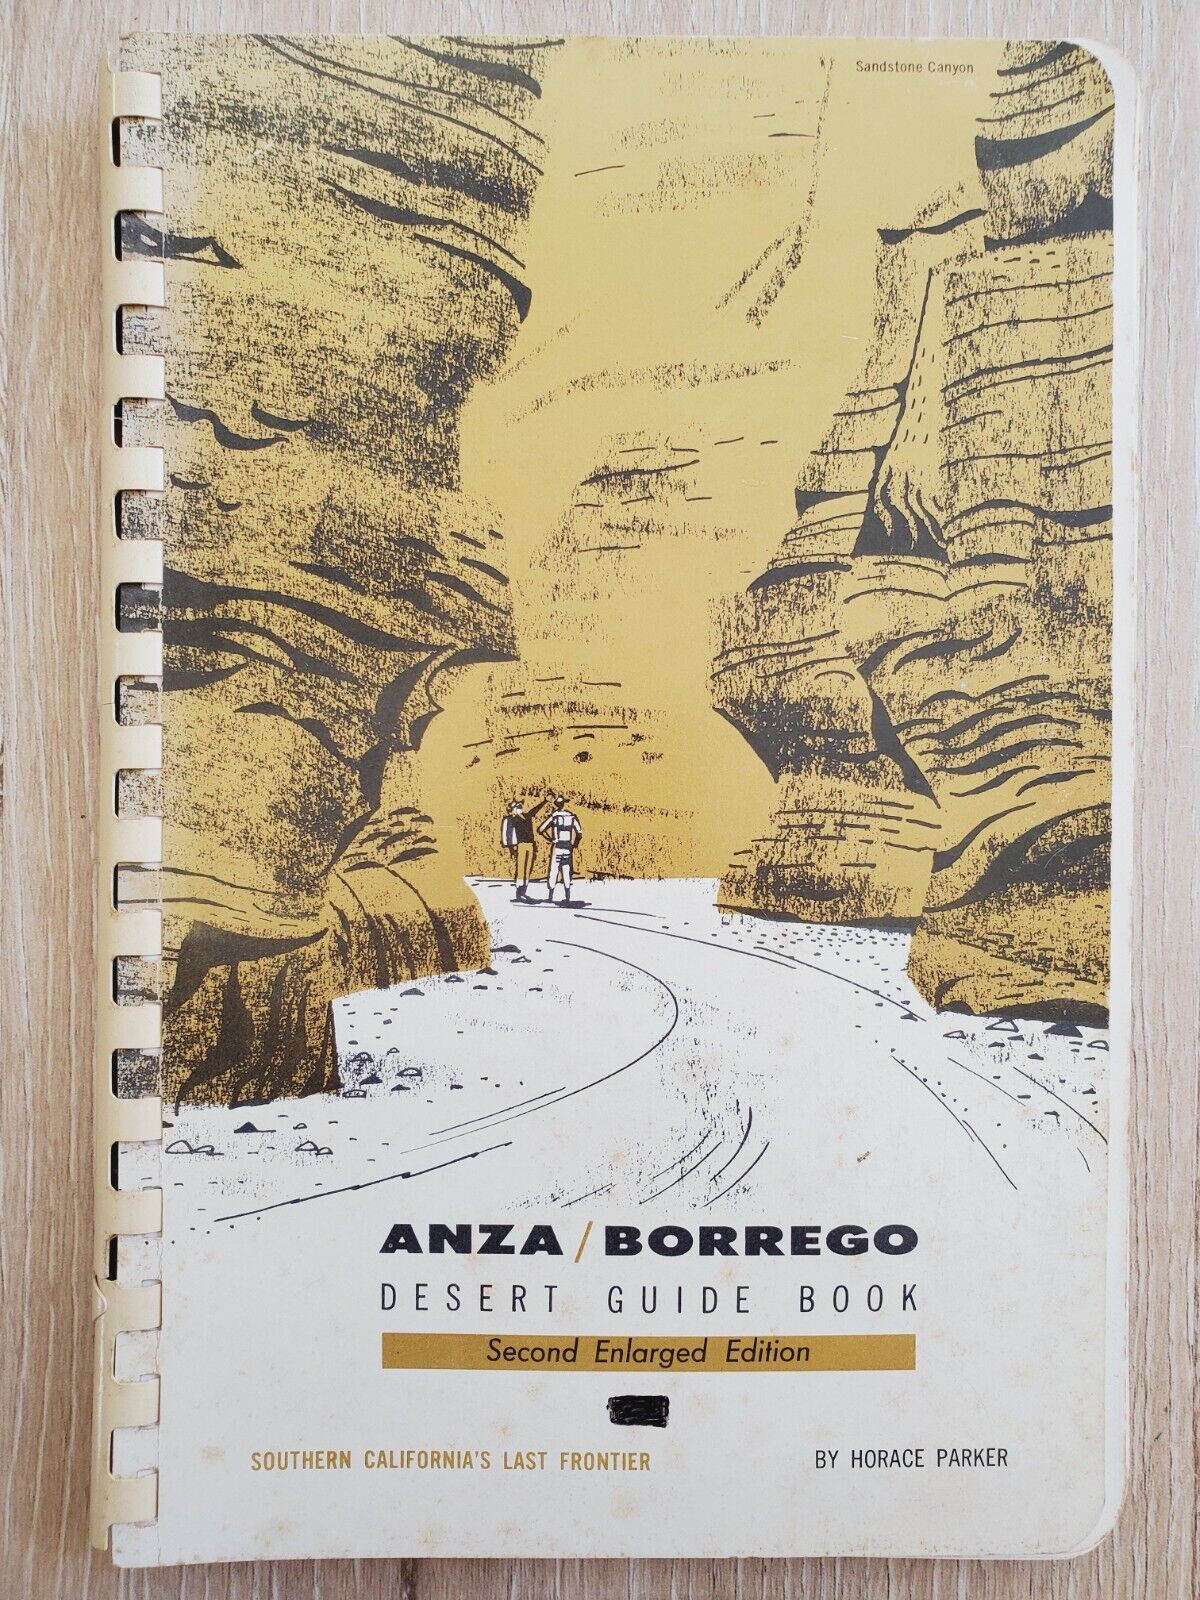 ANZA/BORREGO DESERT GUIDE BOOK Horace Parker 1967 PB 2nd Edition Paisano Press